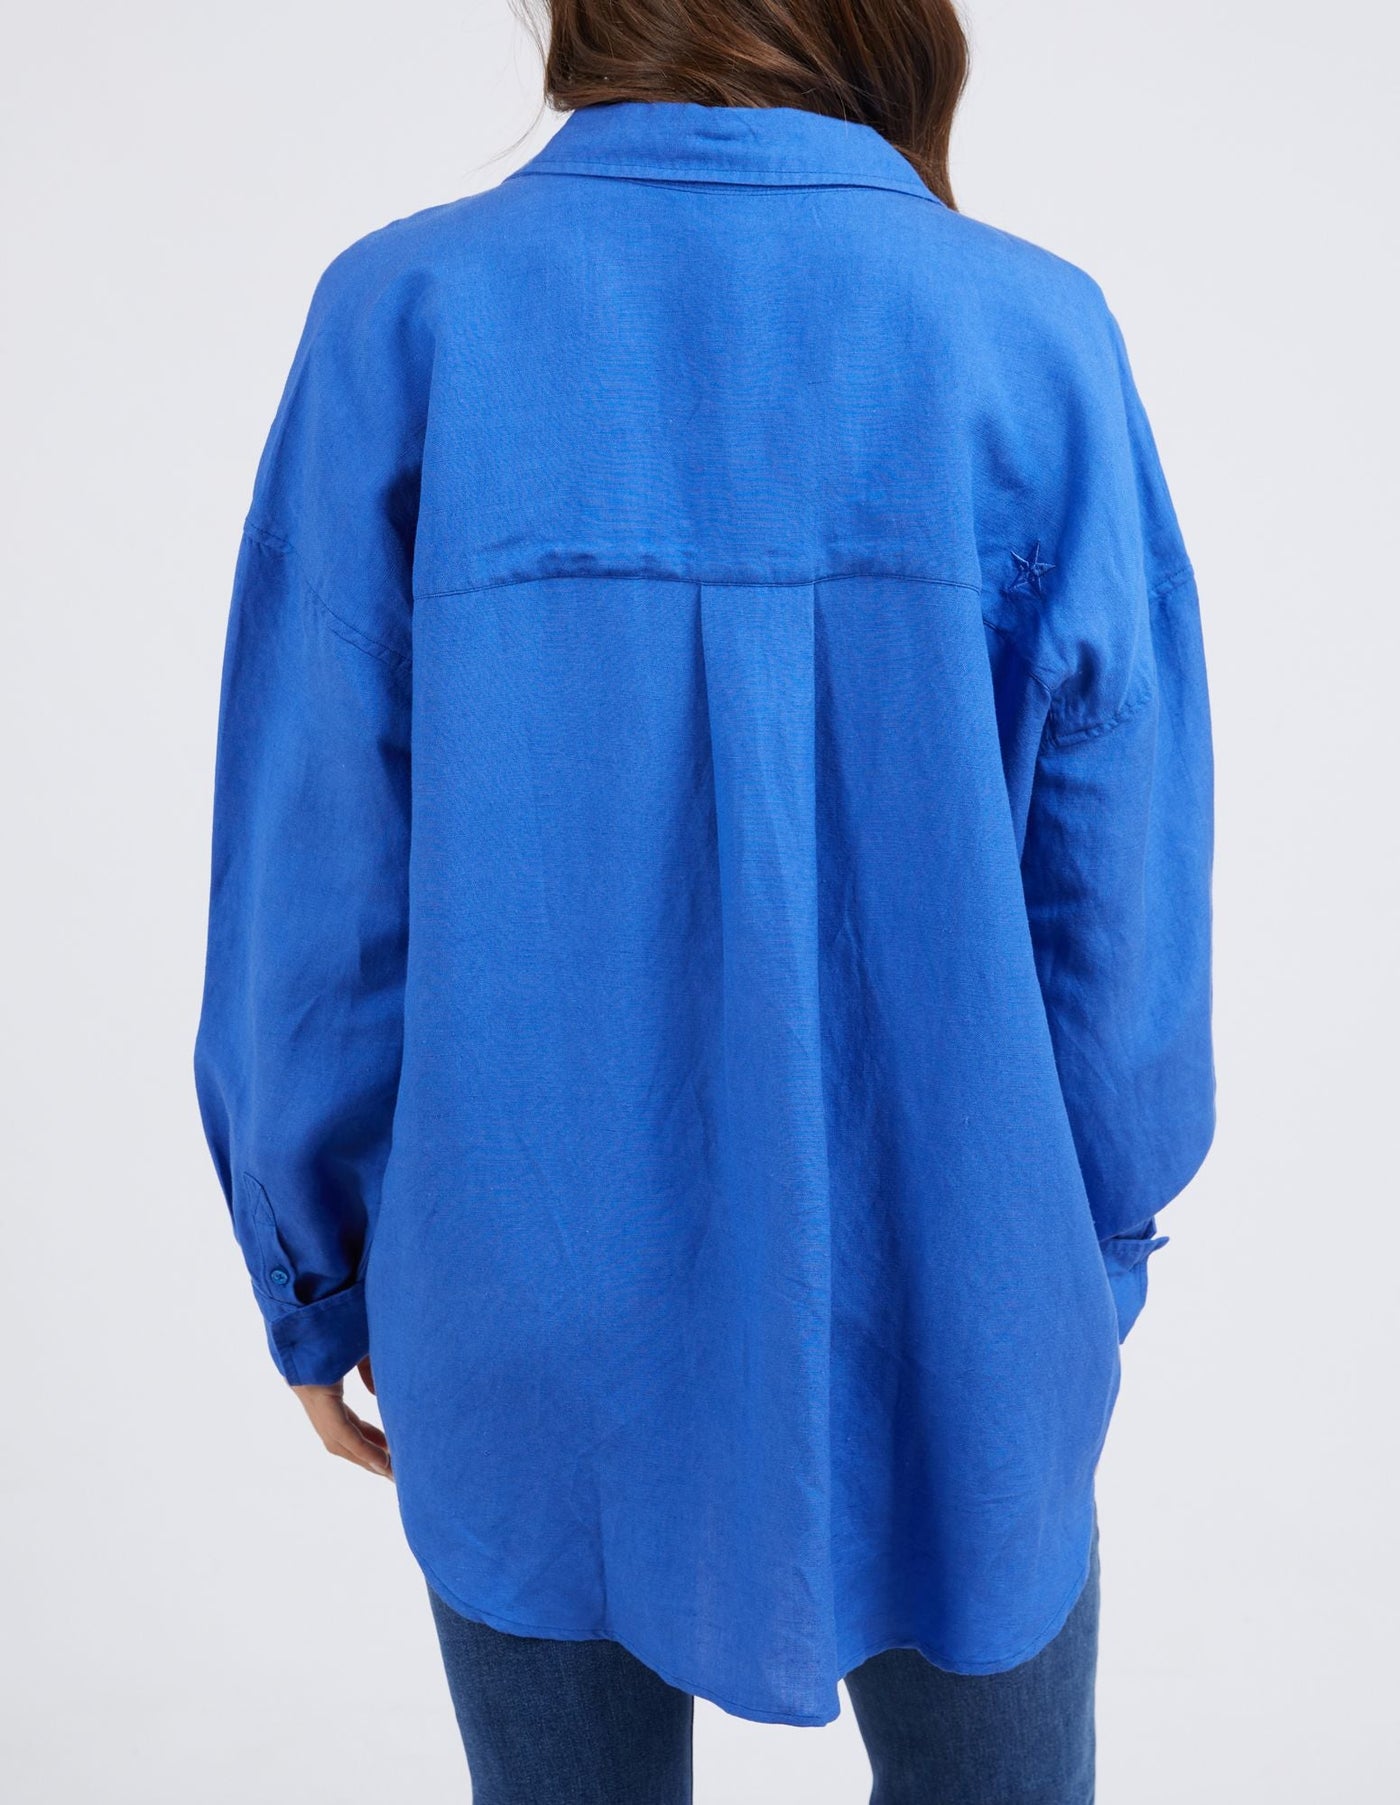 Cordelia Shirt - Royal Blue-Elm Lifestyle-Lima & Co